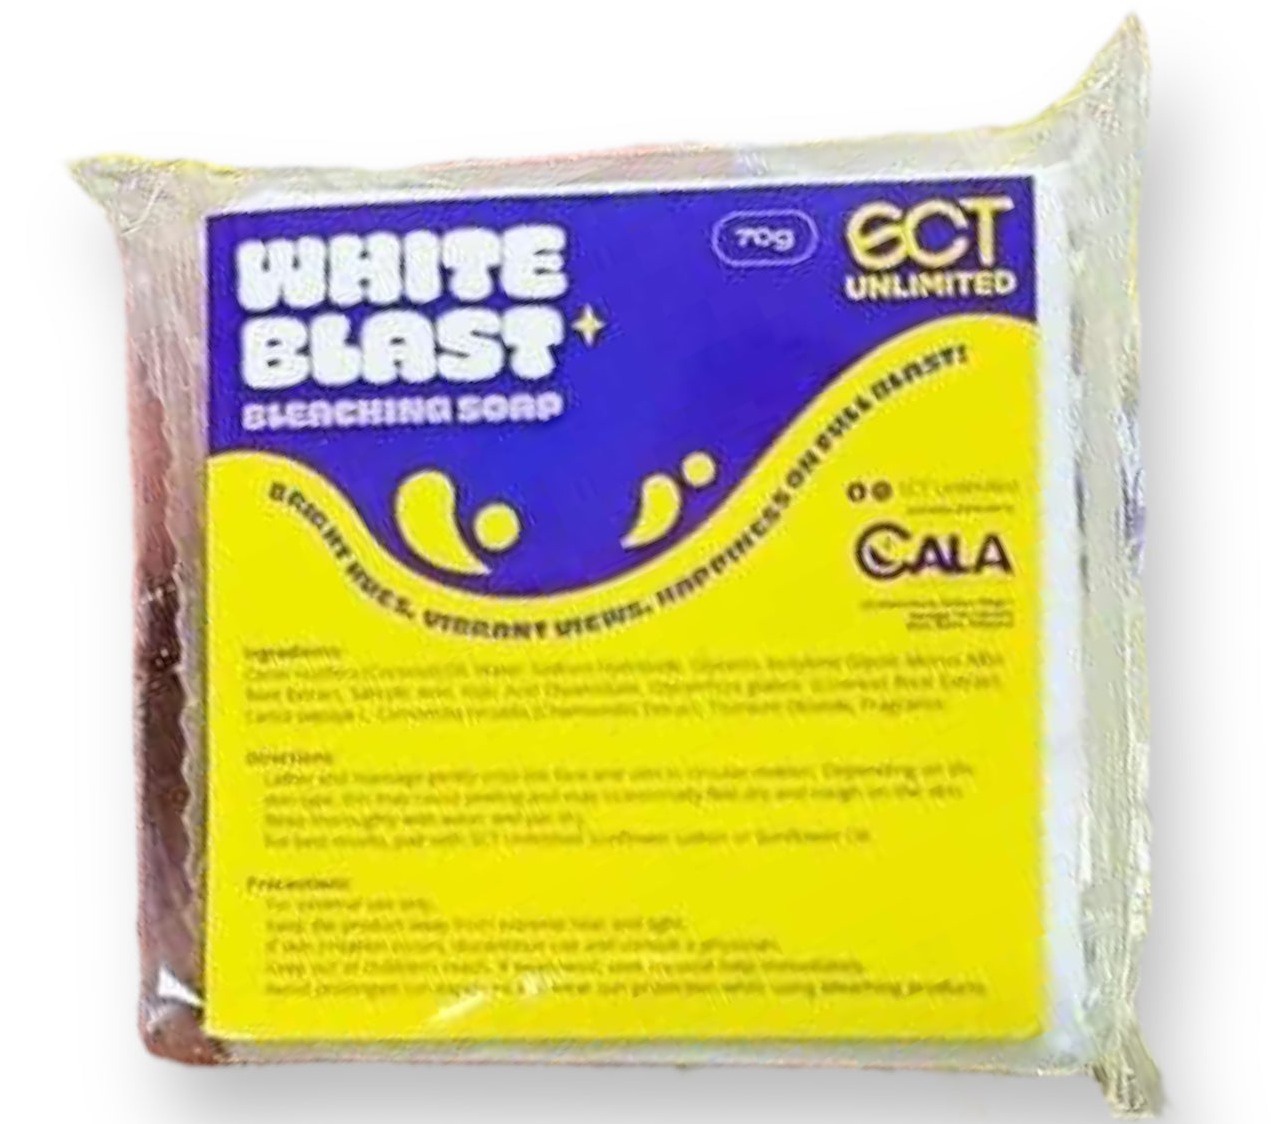 SCT Unlimited White Blast Bleaching Soap